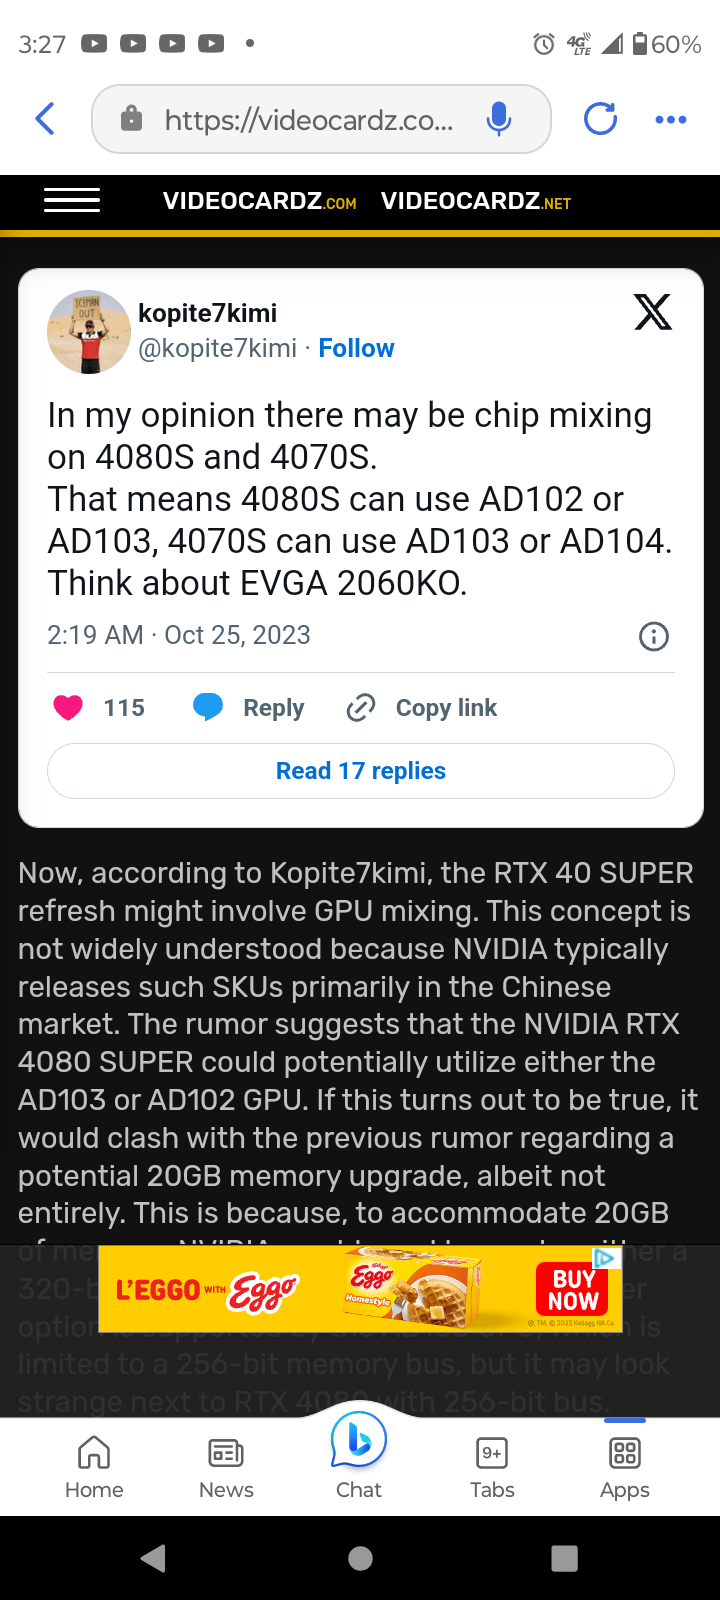 NVIDIA RTX 4080/4070 SUPER update might involve a mix of AD103/102/104 GPUs  